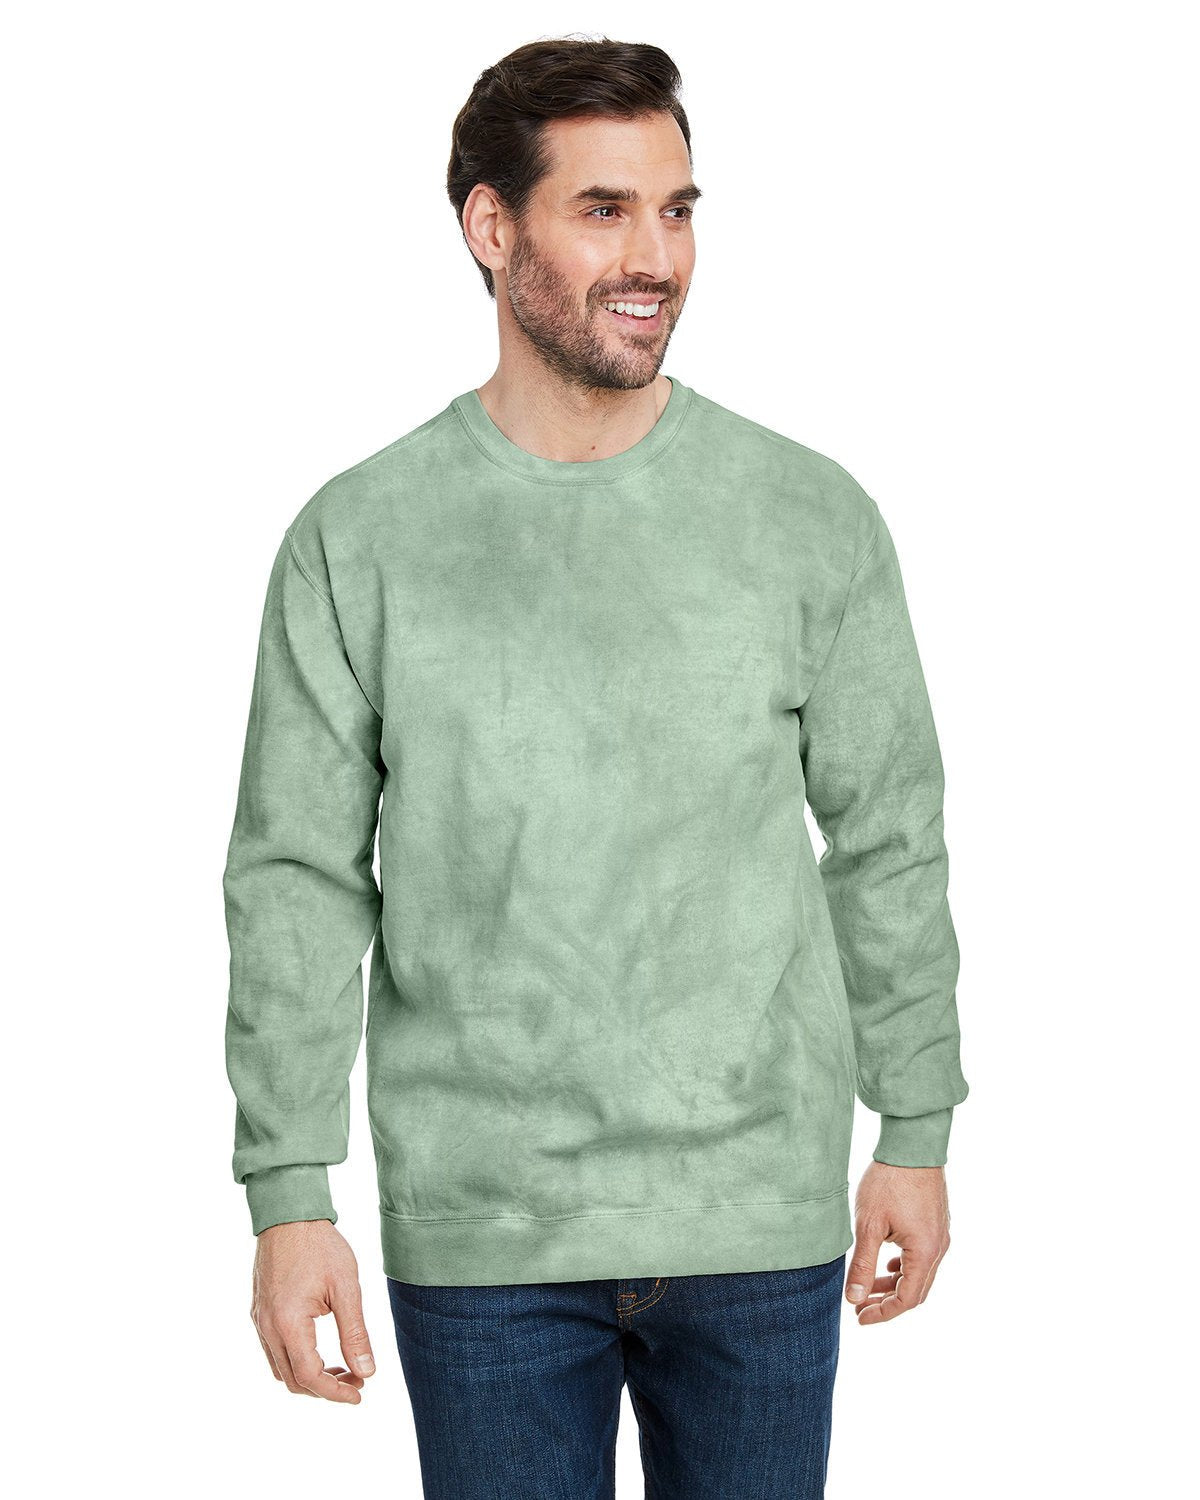 1545CC-Comfort Colors-FERN-Comfort Colors-Sweatshirts-1